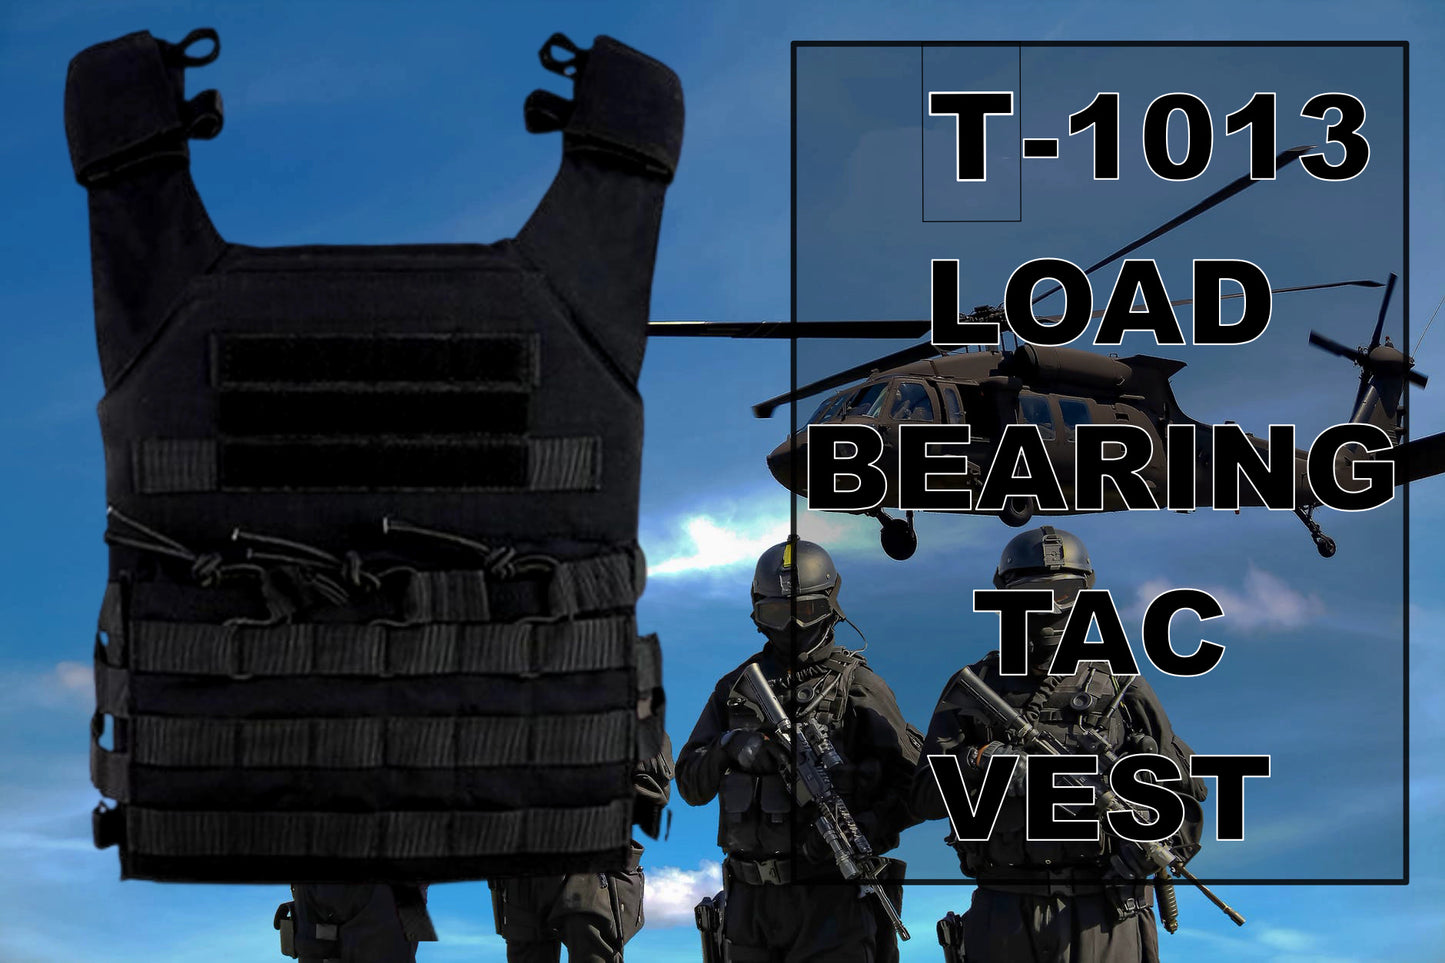 Concept T-1013 Tactical Load bearing vest